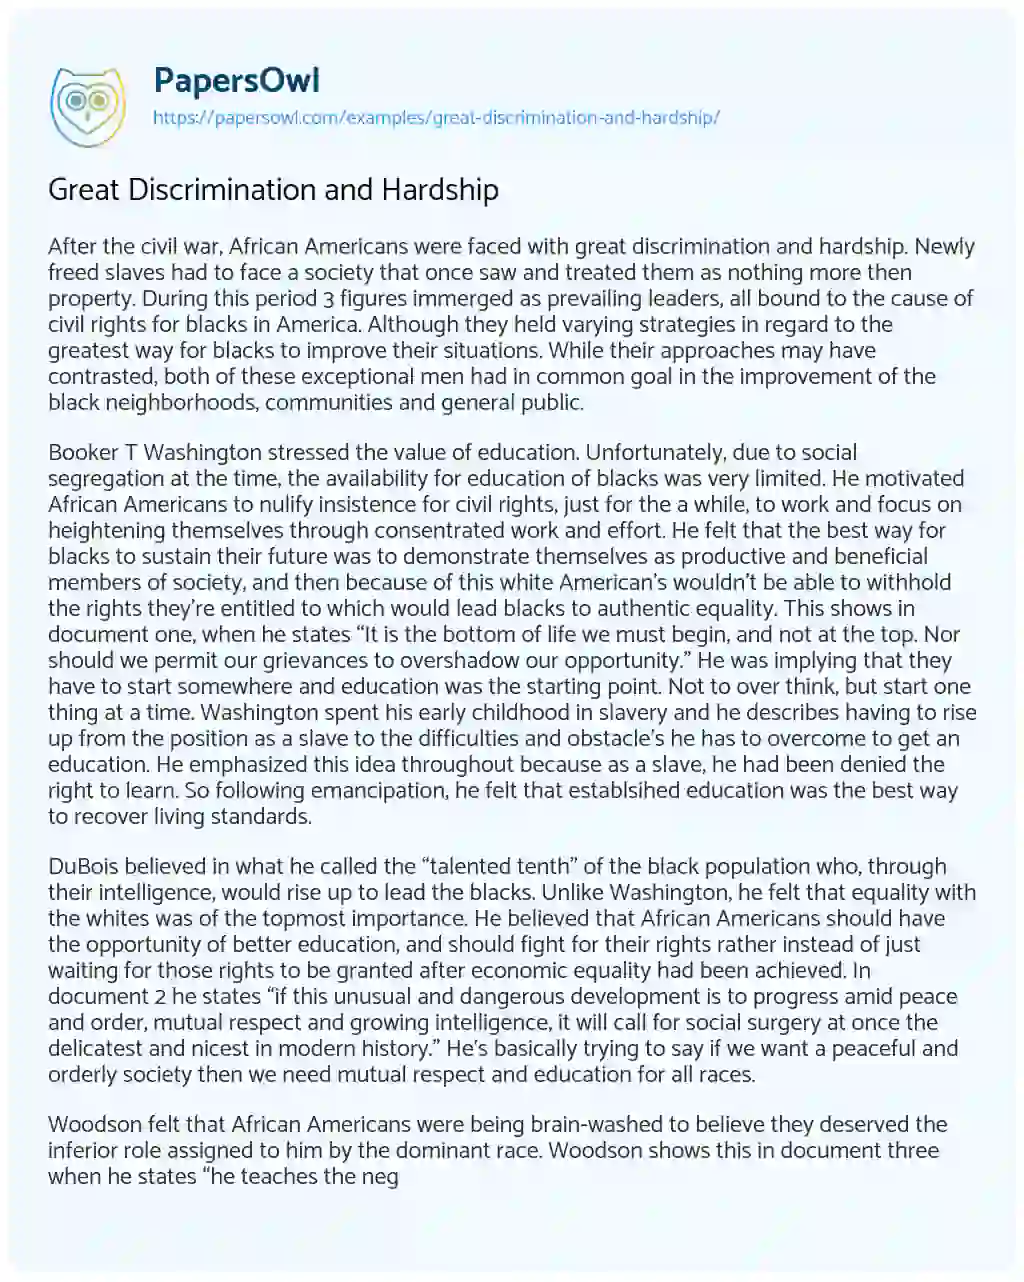 Great Discrimination and Hardship essay